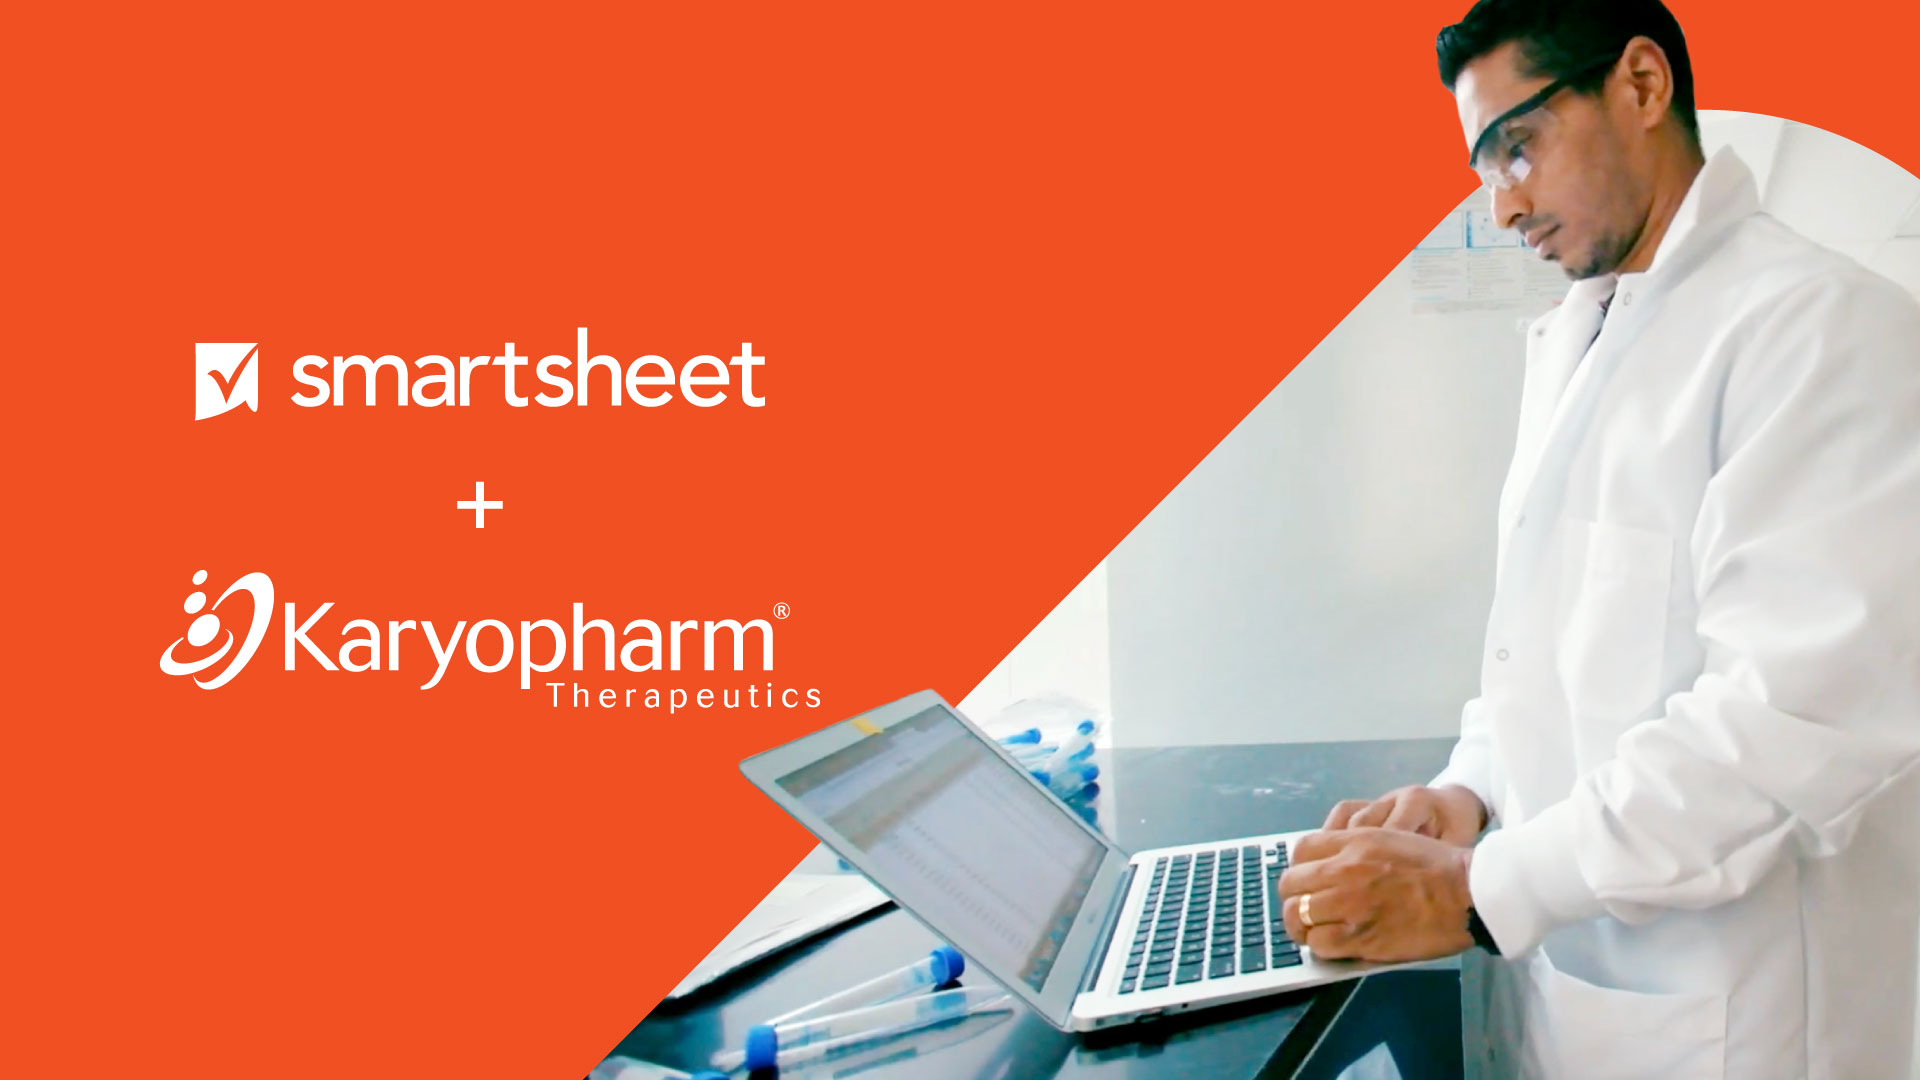 A Karyopharm Therapeutics lab tech and Smartsheet customer types on a laptop.